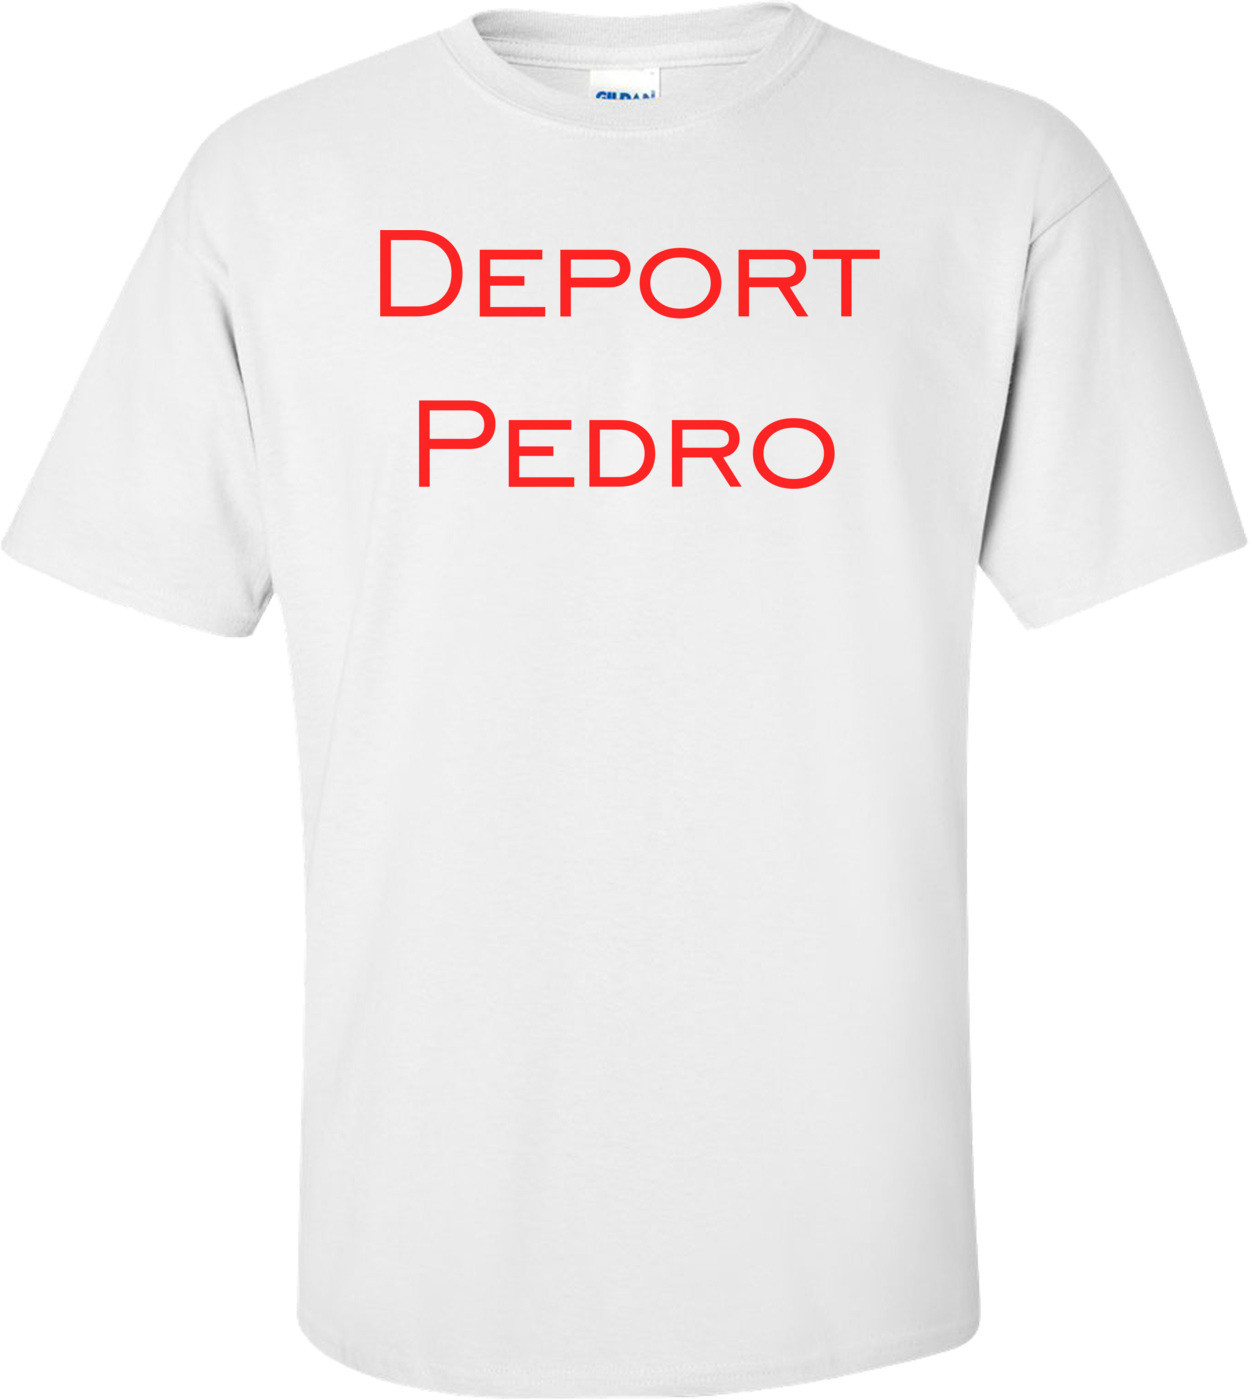 Deport Pedro Shirt